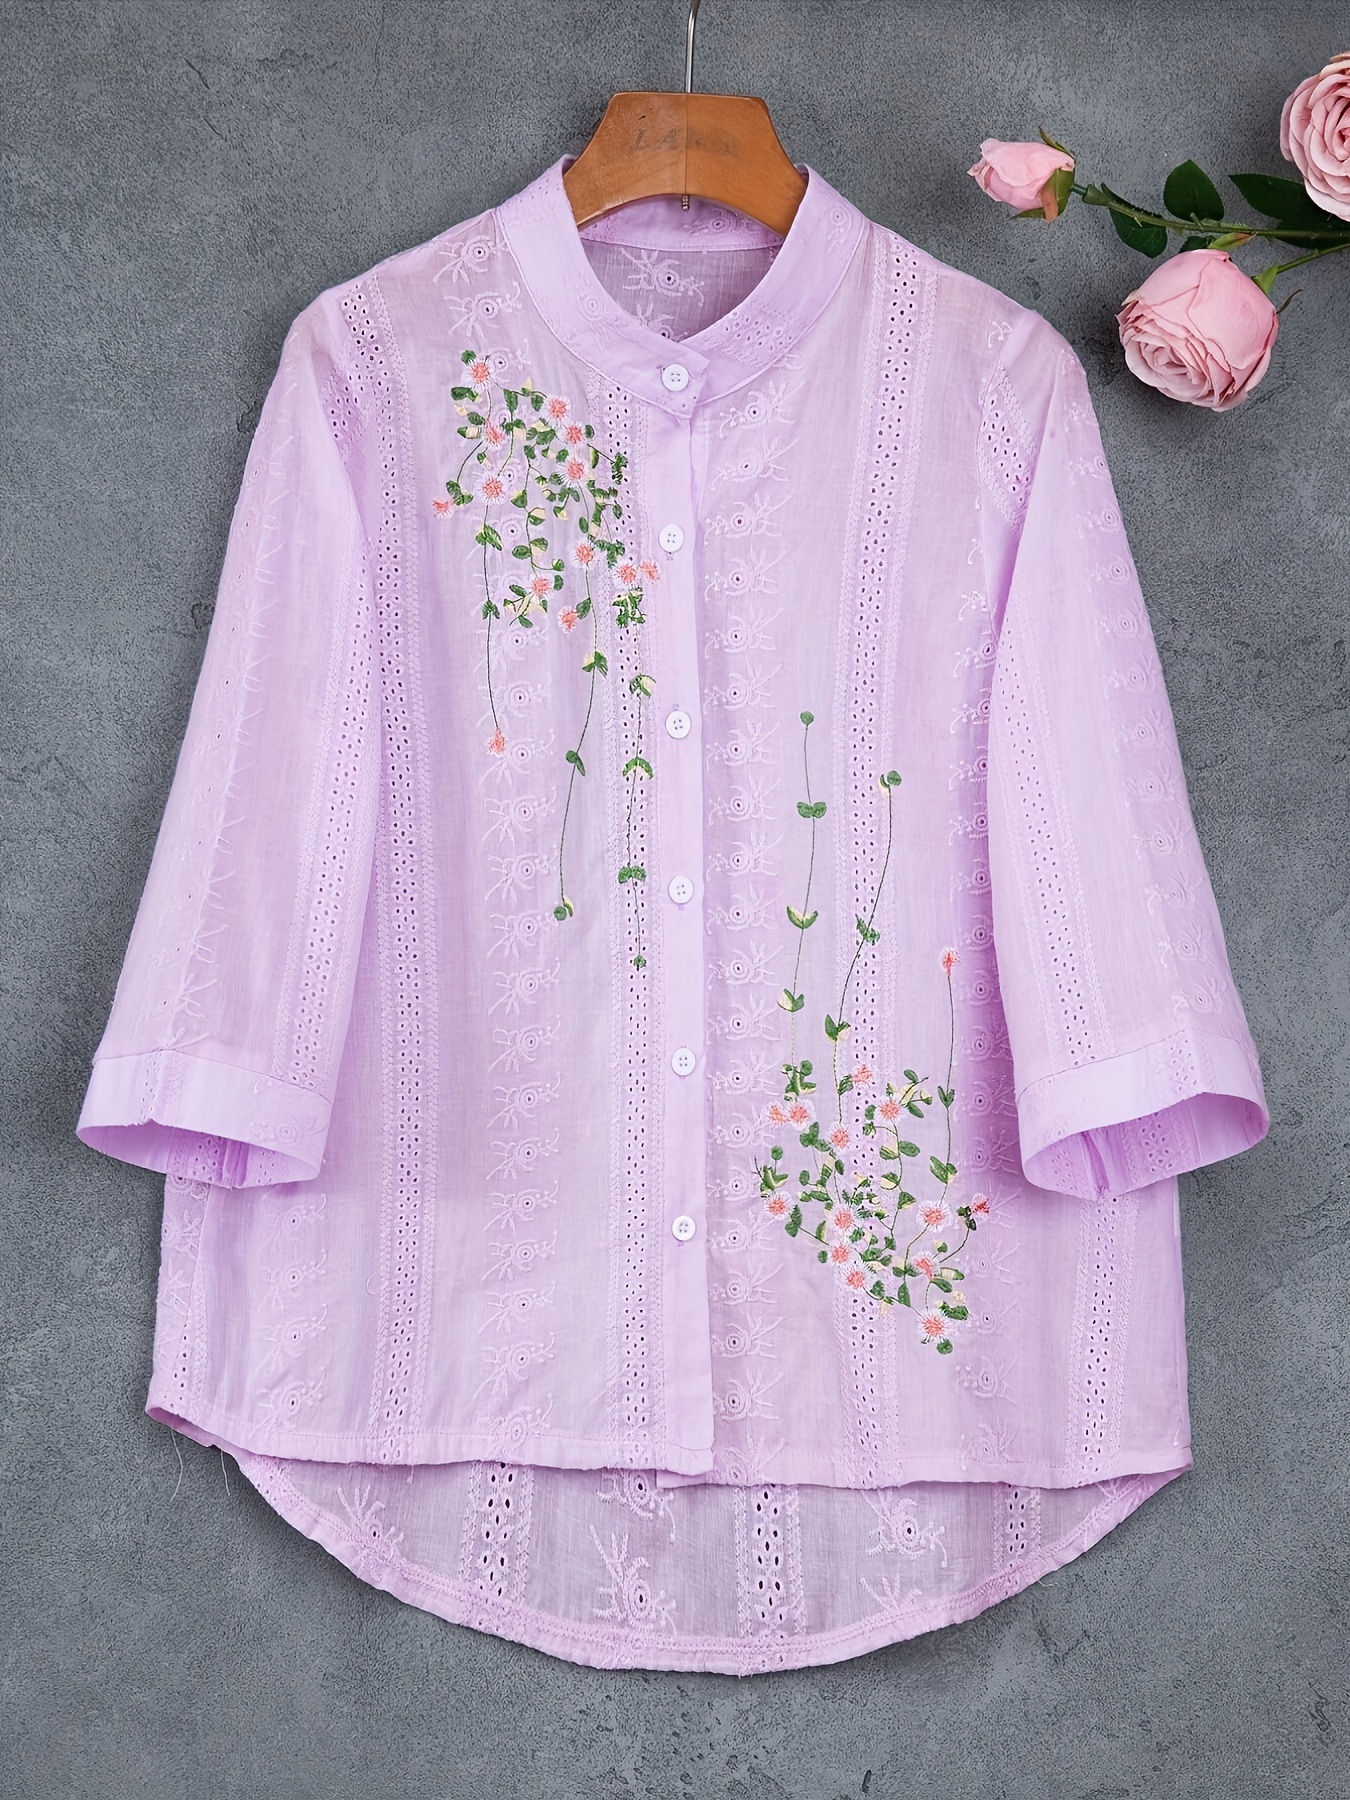 eyelet floral blouse elegant button front blouse for spring summer womens clothing details 0